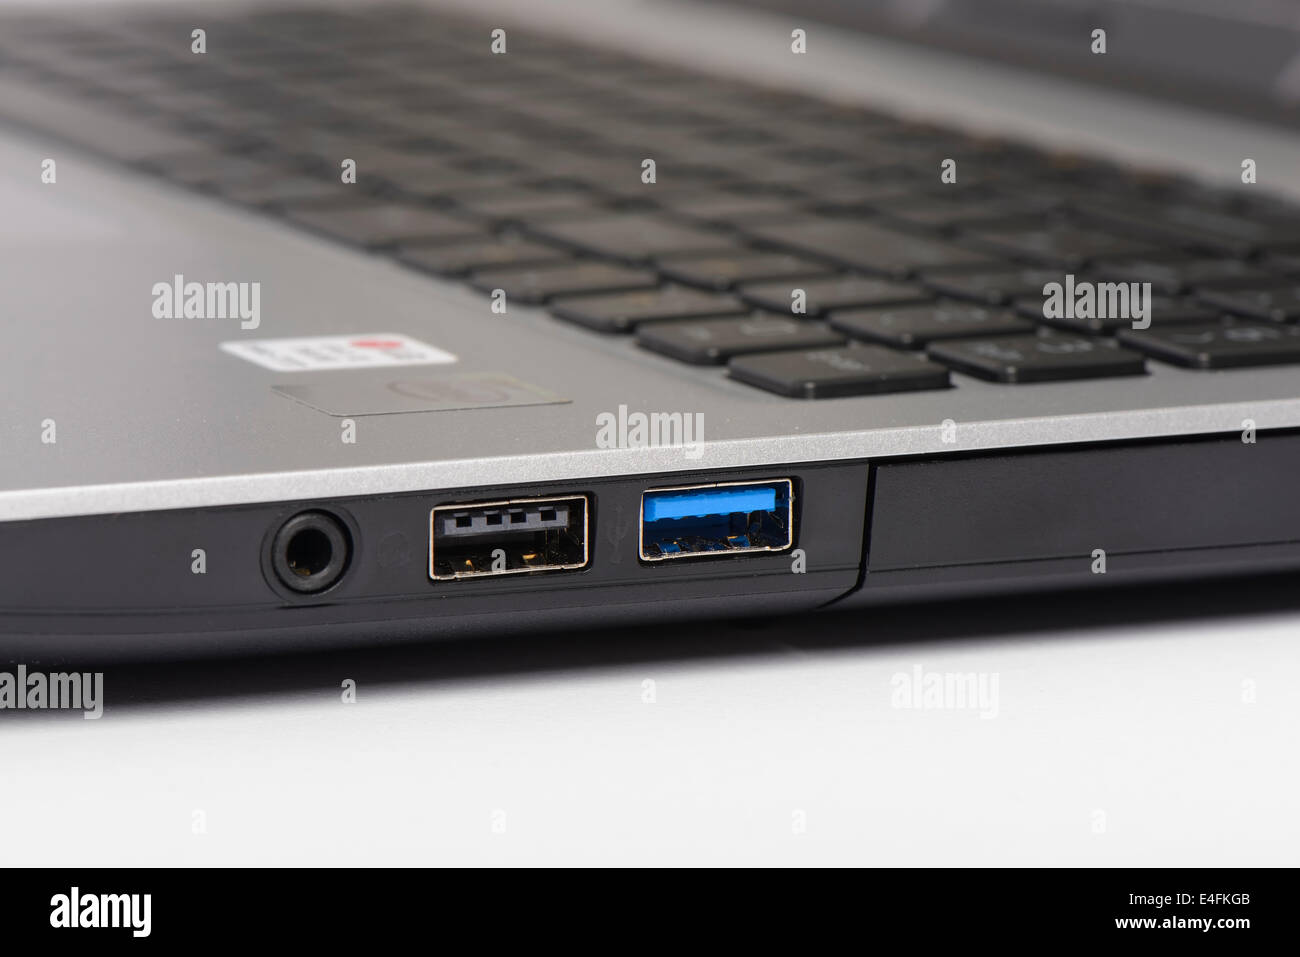 Cable USB Cargador Android, USB a Micro USB de alta velocidad USB2.0 Sync y  cables de carga S004